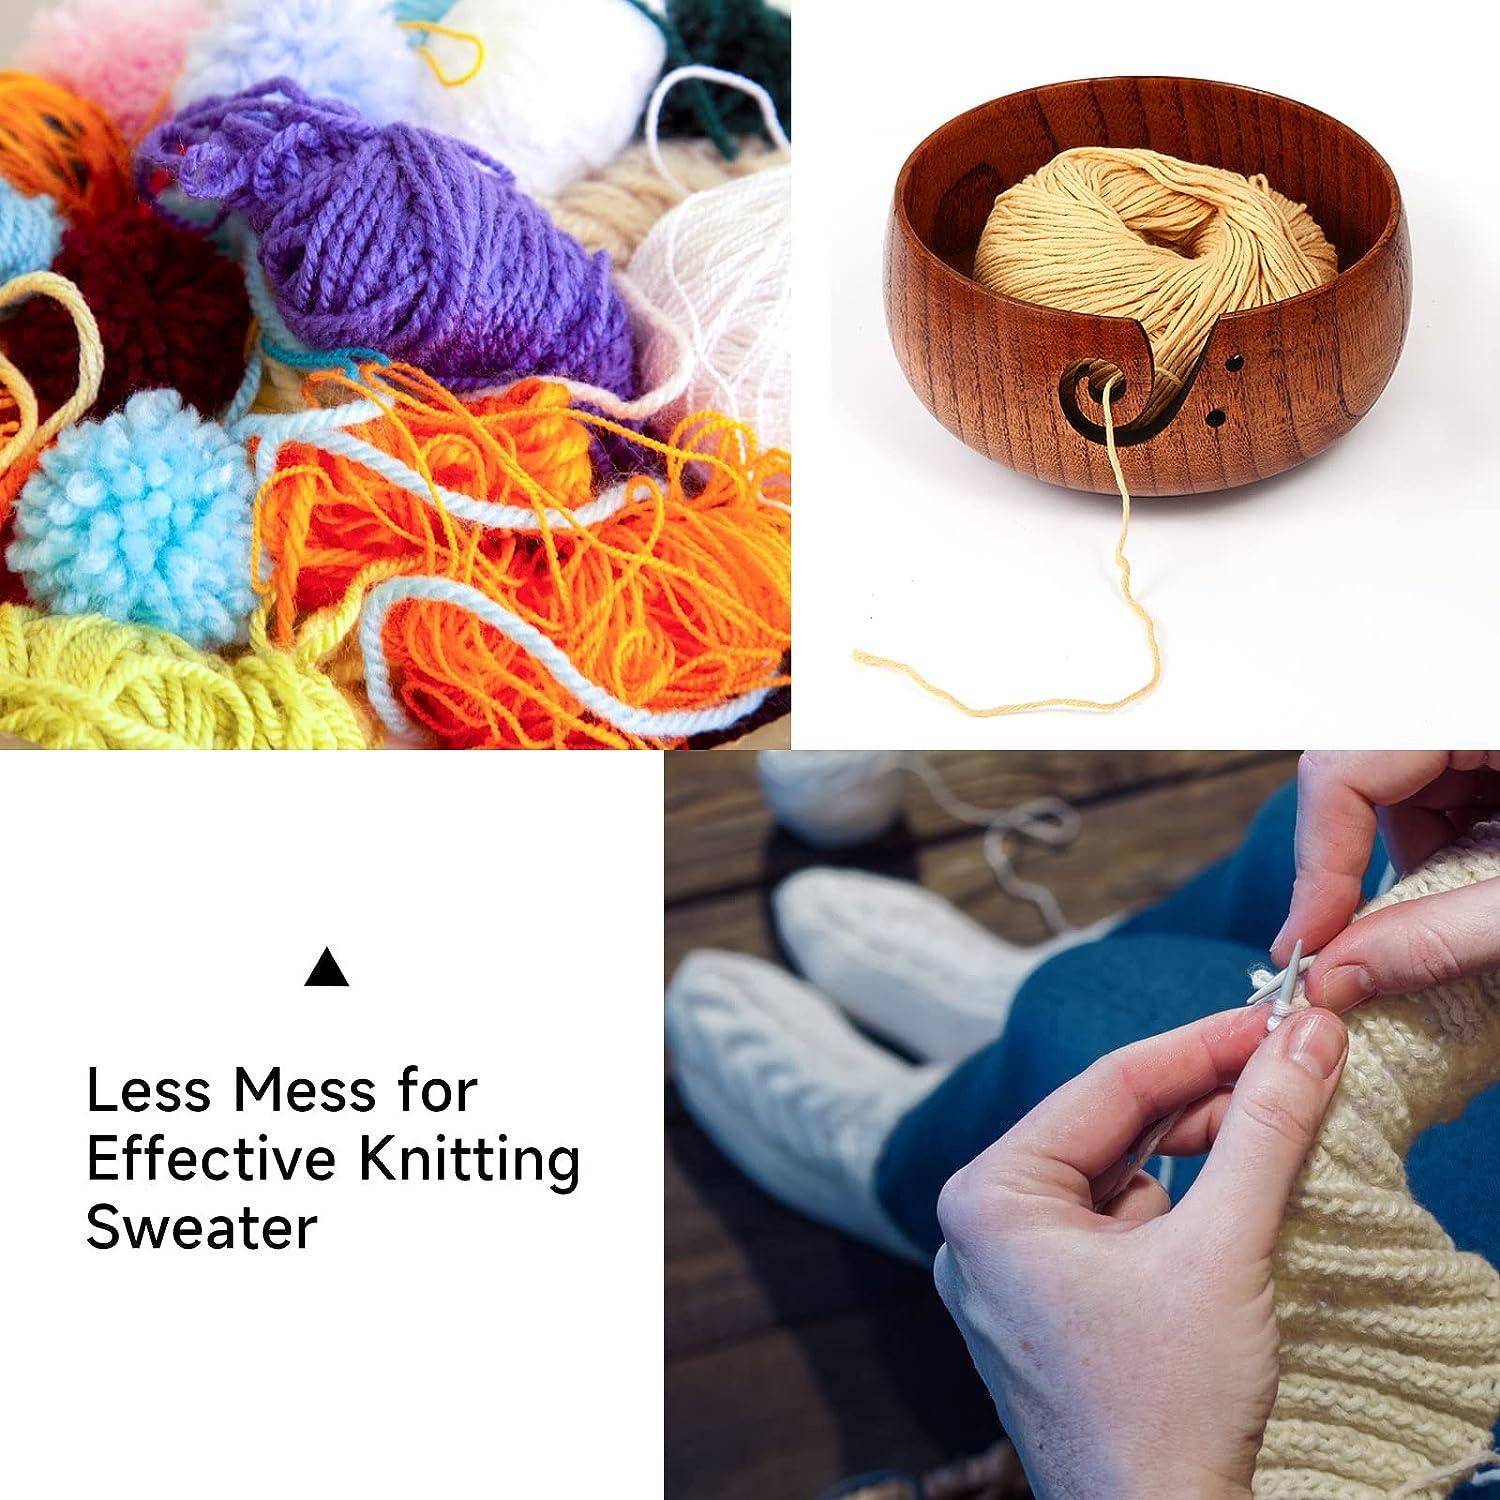 Knit - I knit past my bedtime - Yarn Bowl - 6 in.